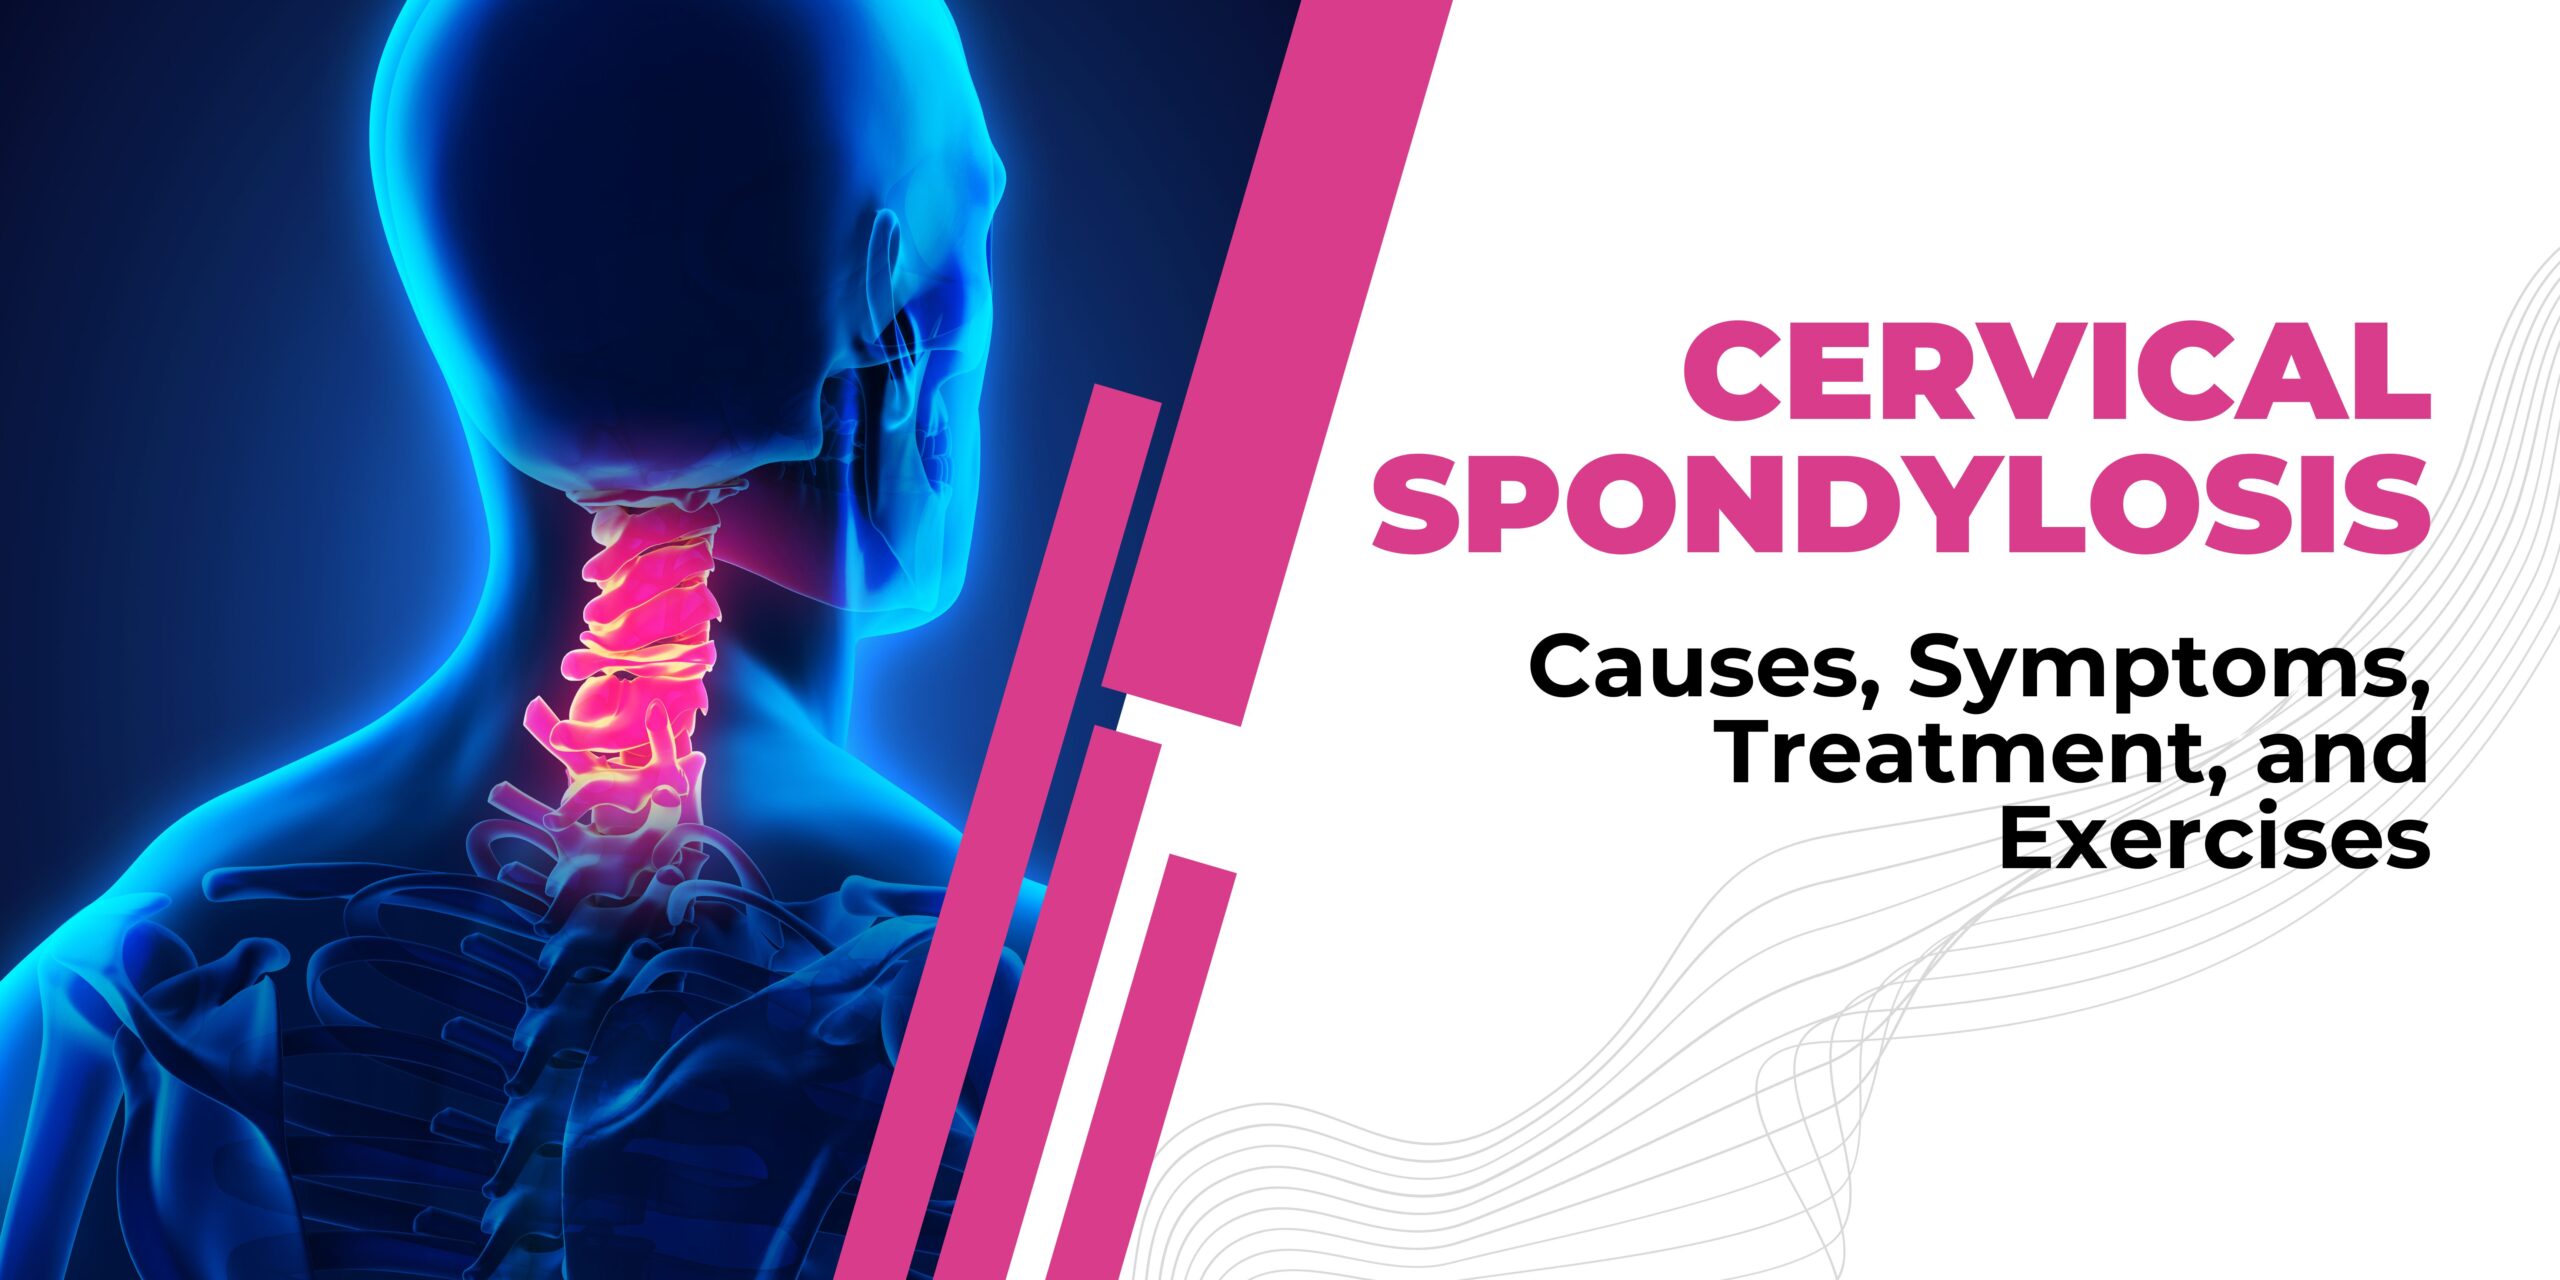 Cervical Spondylosis: Causes, Symptoms, Treatment, and Exercises